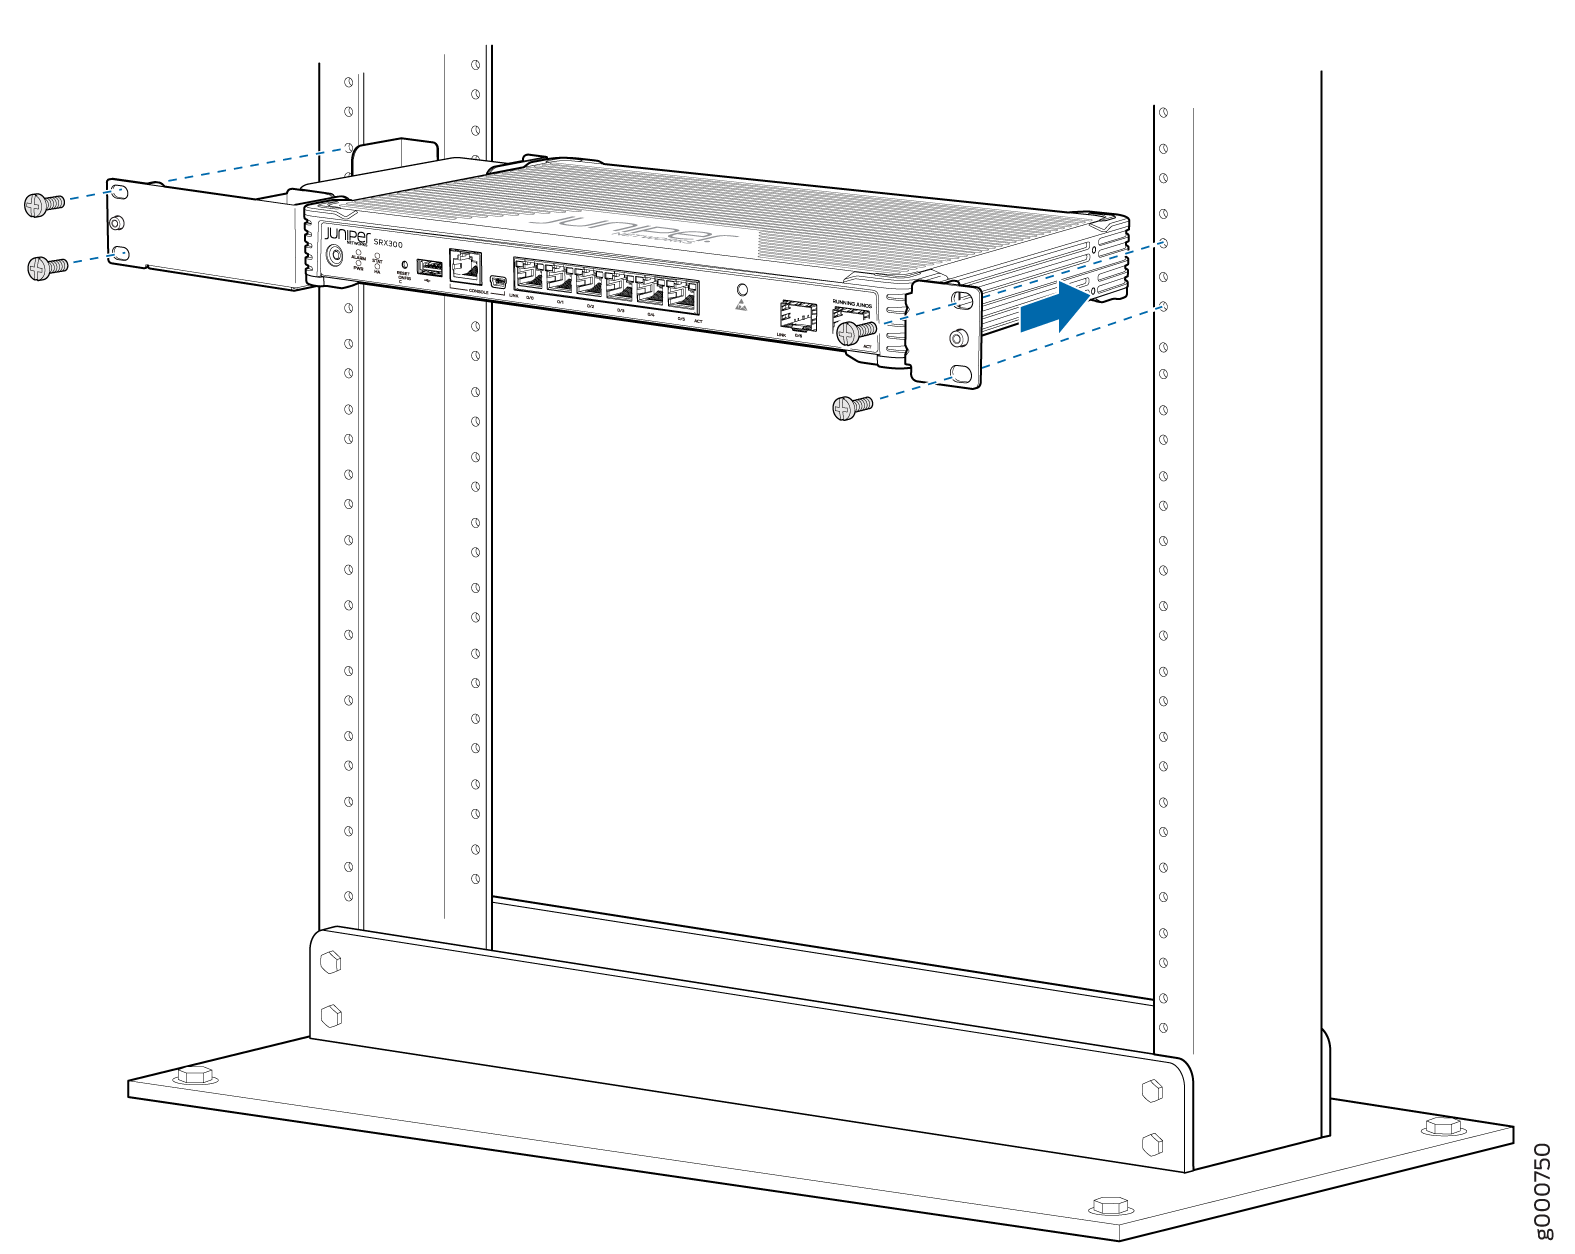 SRX300 Firewall Rack Installation — Positioning the SRX300 Firewall in a Rack